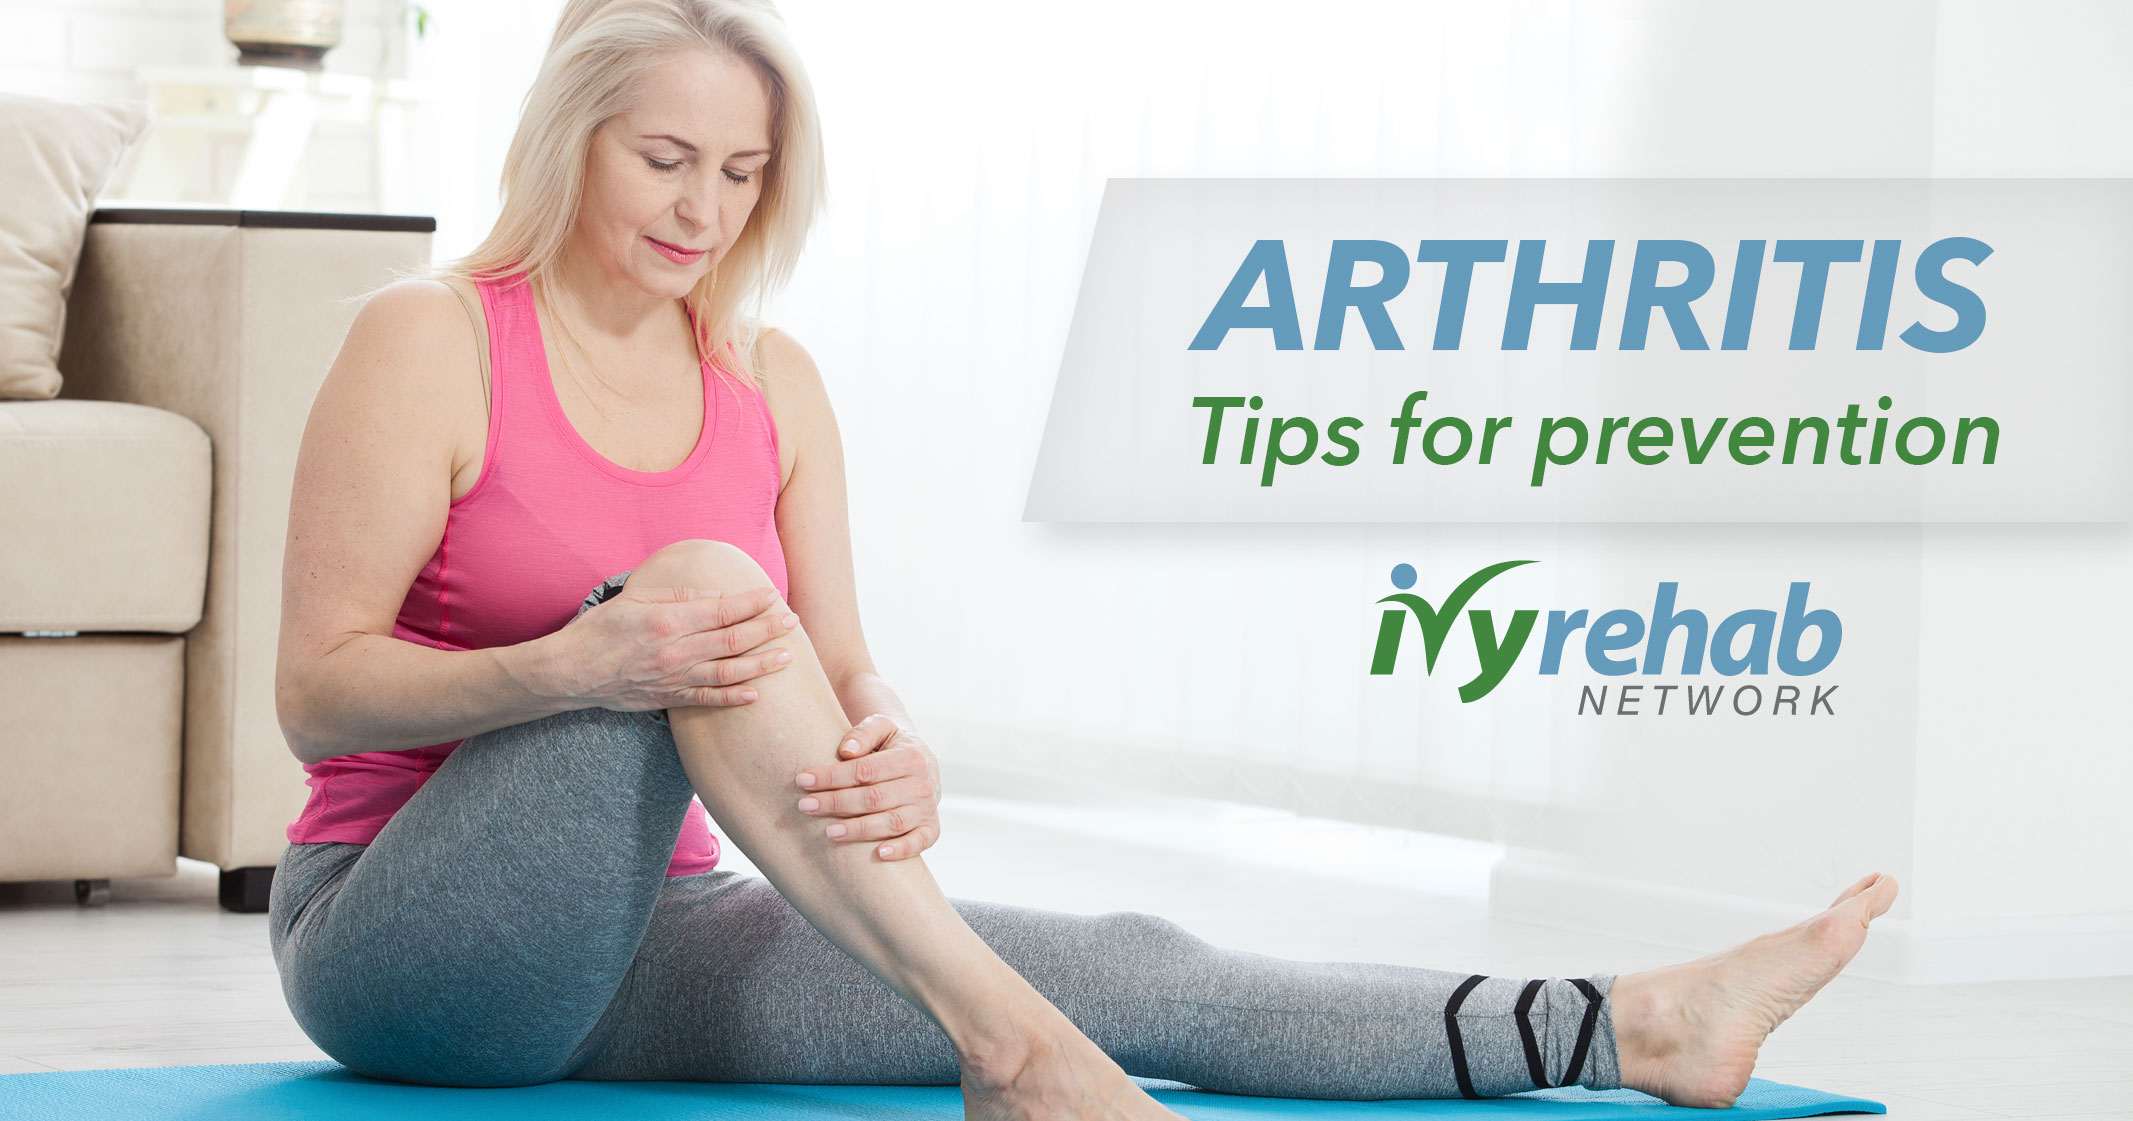 Tips to prevent arthritis